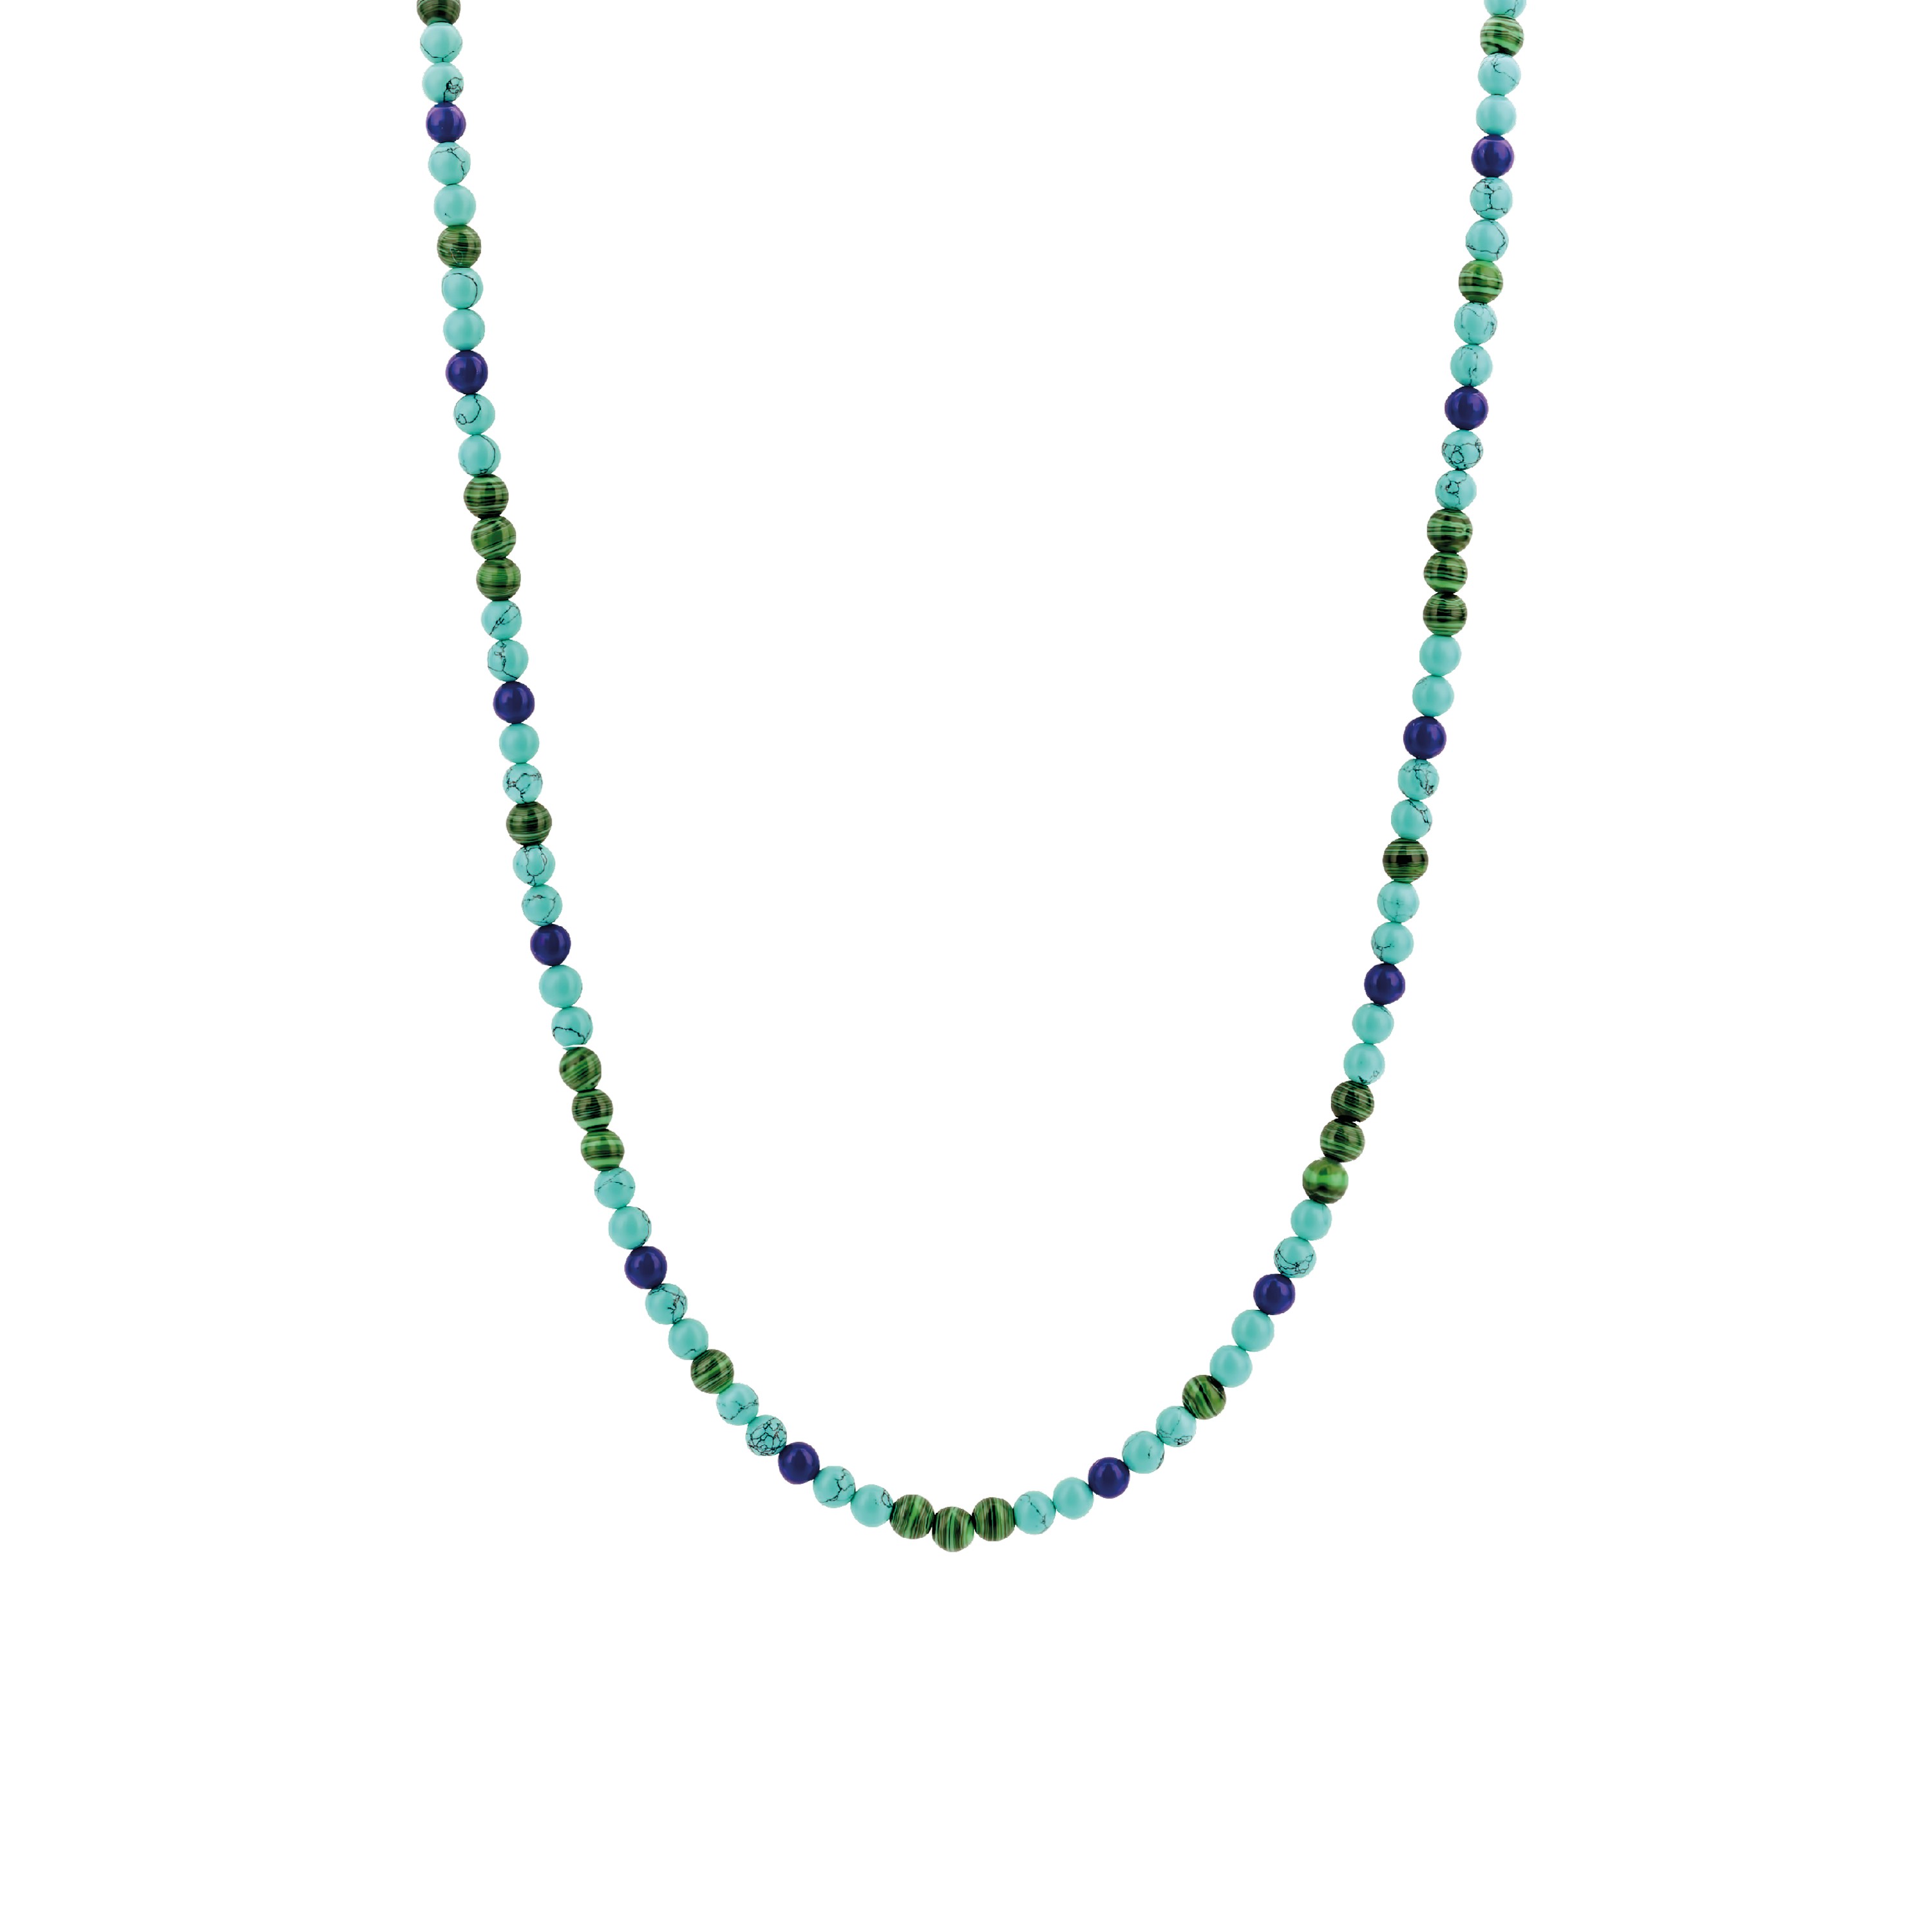 TI SENTO - Milano Necklace 3916TM Gala Jewelers Inc. White Oak, PA